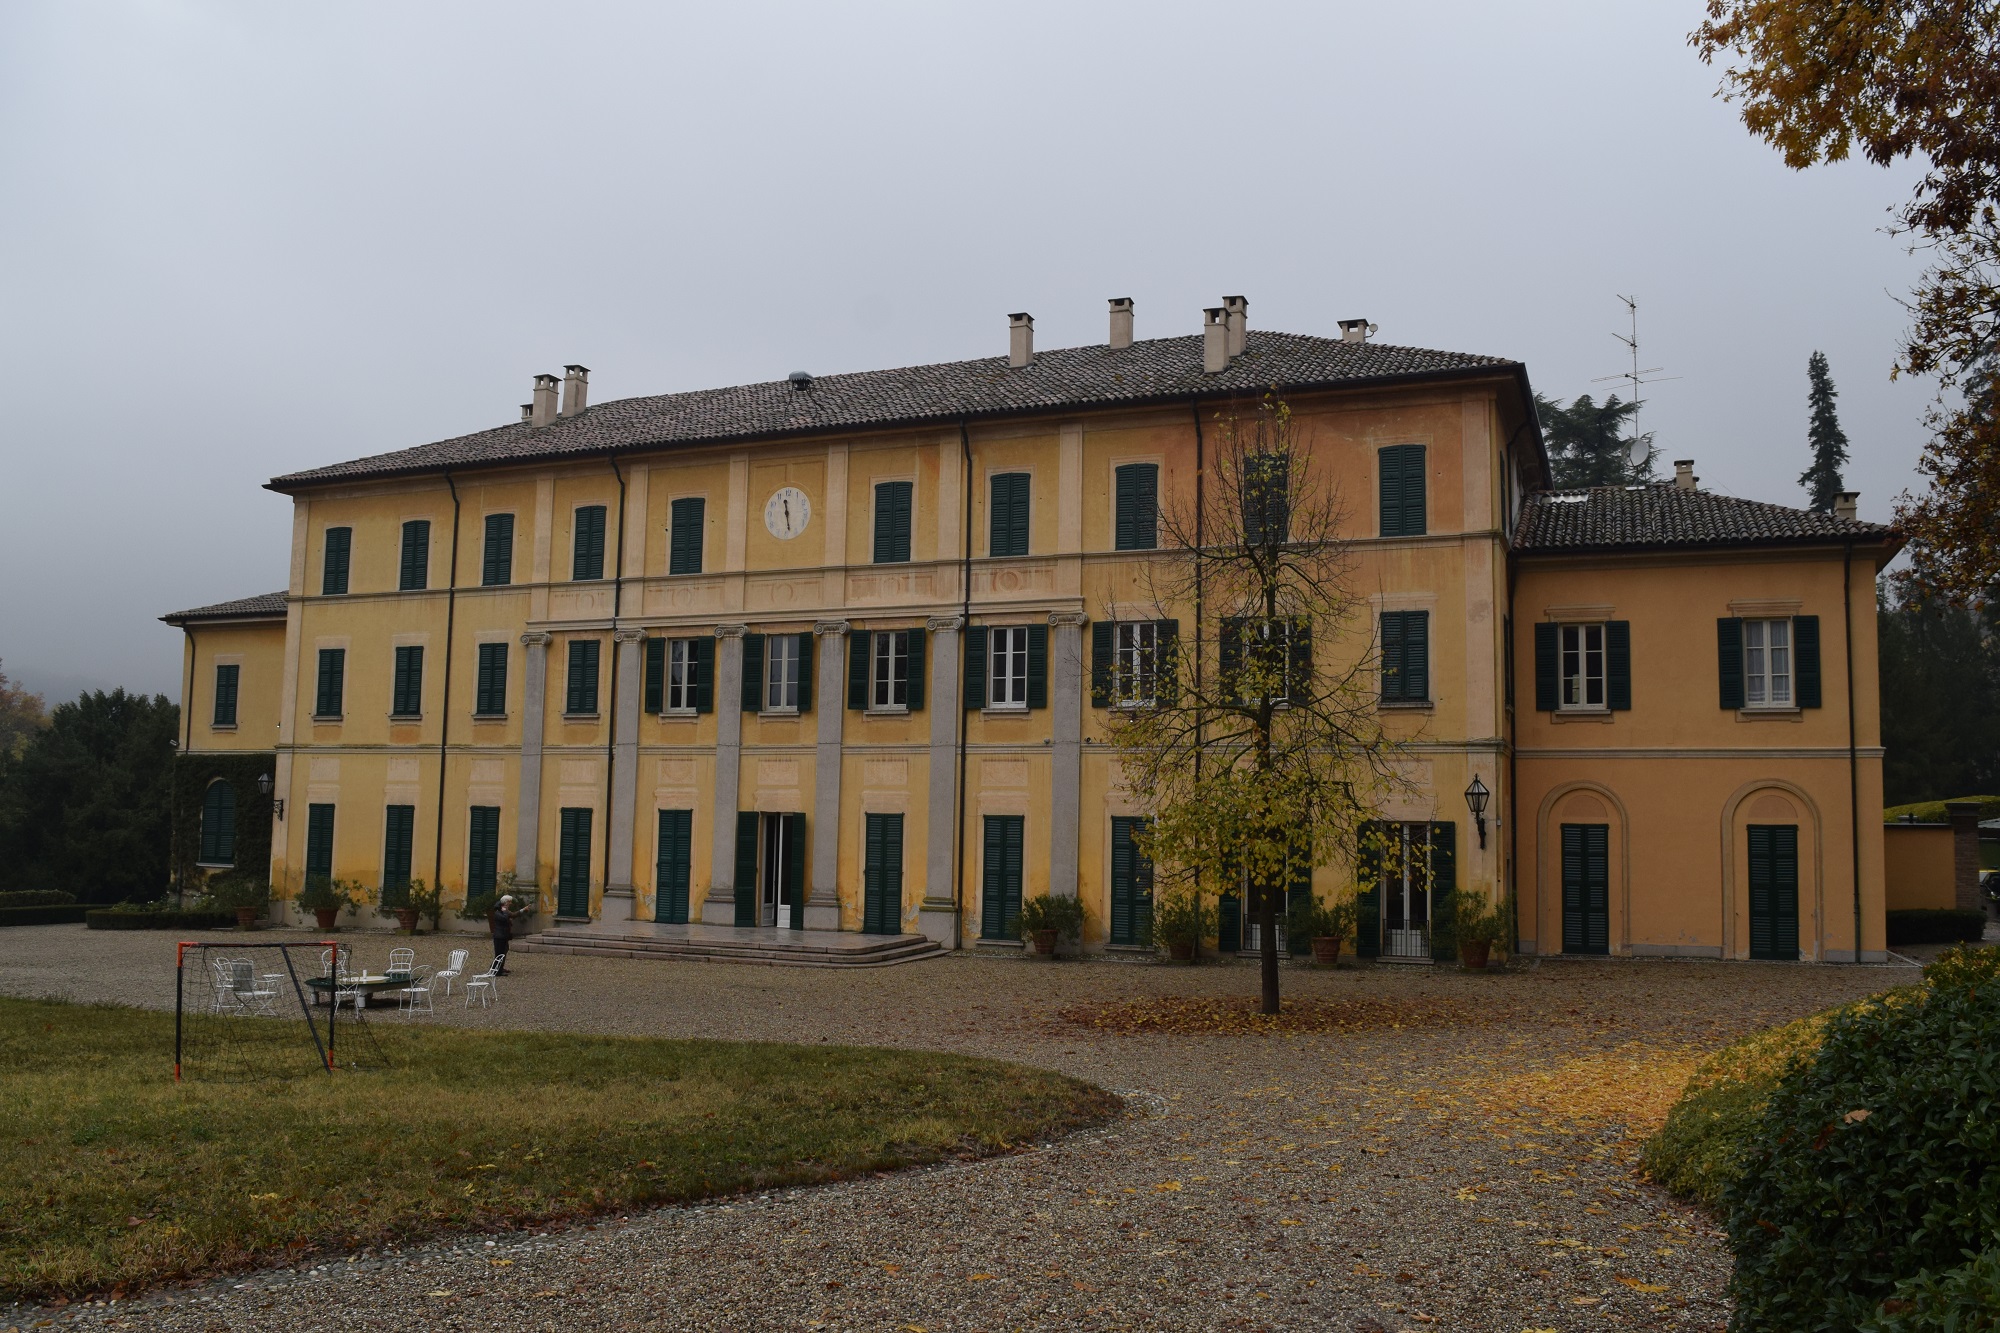 Villa e parco de' Giorgi Vistarino (villa - parco) - Rocca de' Giorgi (PV) 